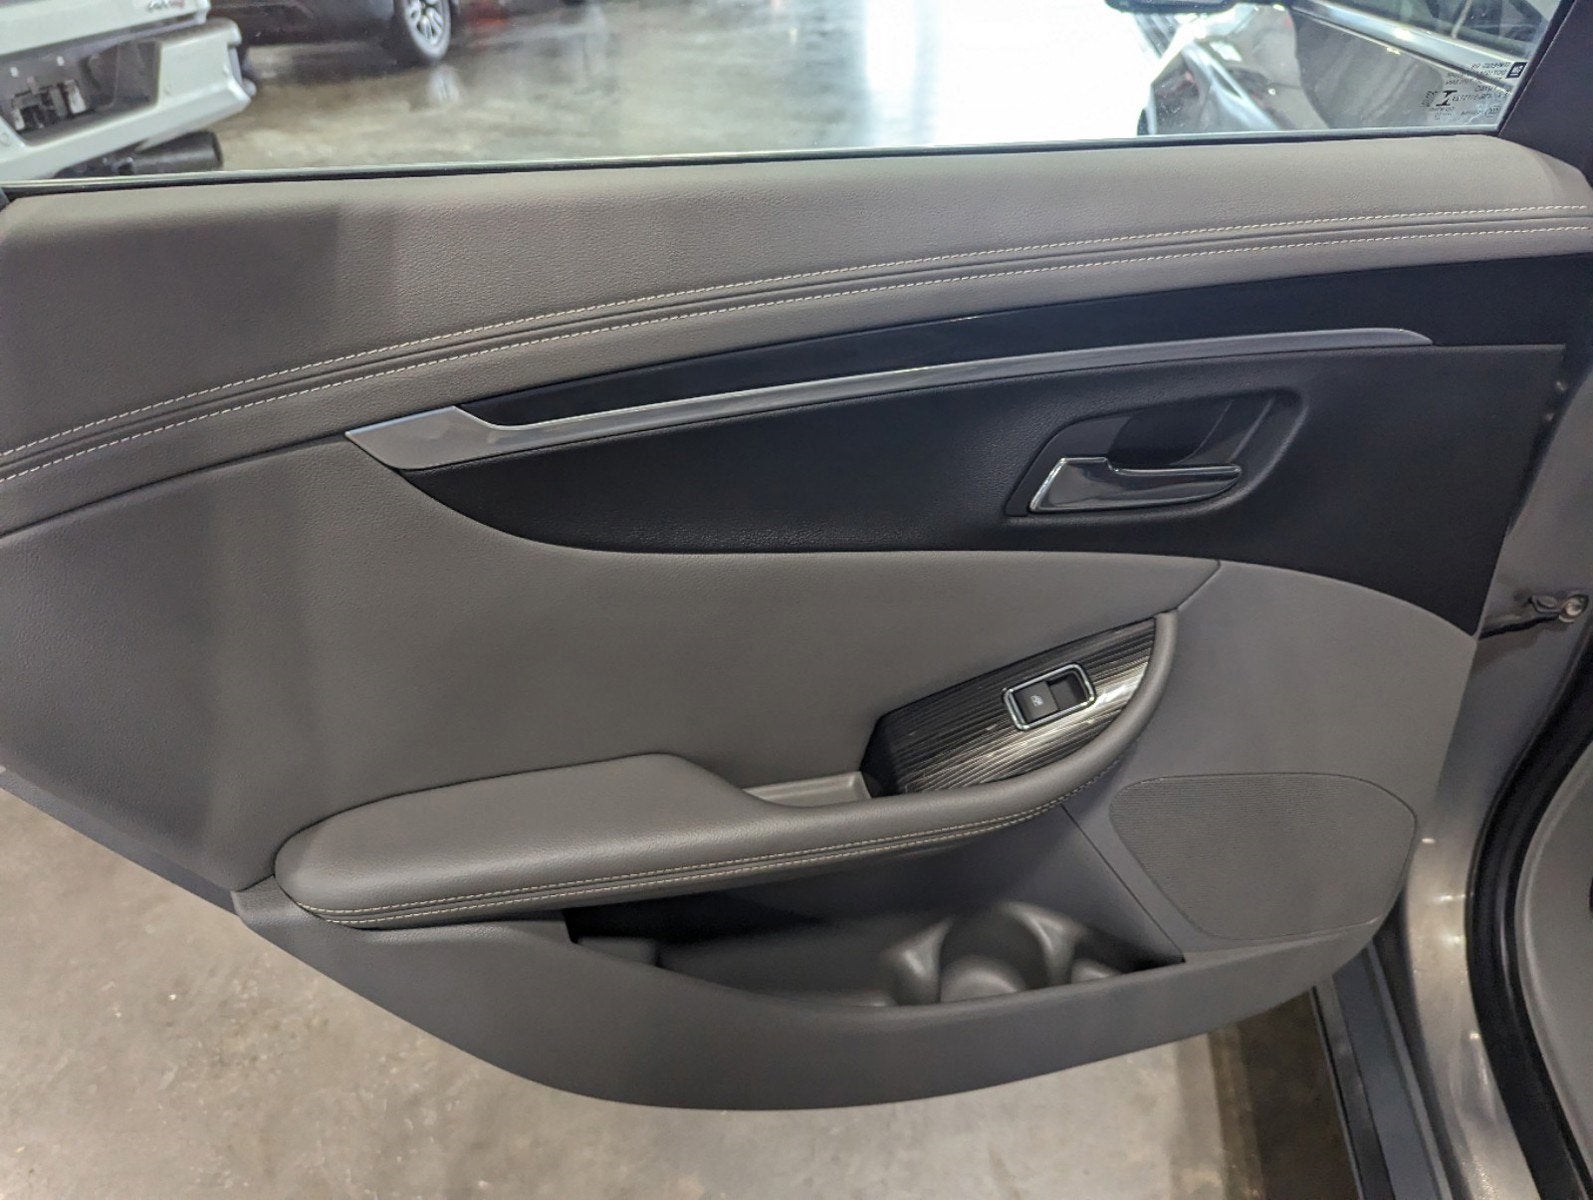 2018 Chevrolet Impala LT Front Wheel Drive Premium Cloth Preferred Equipment Pkg Nav